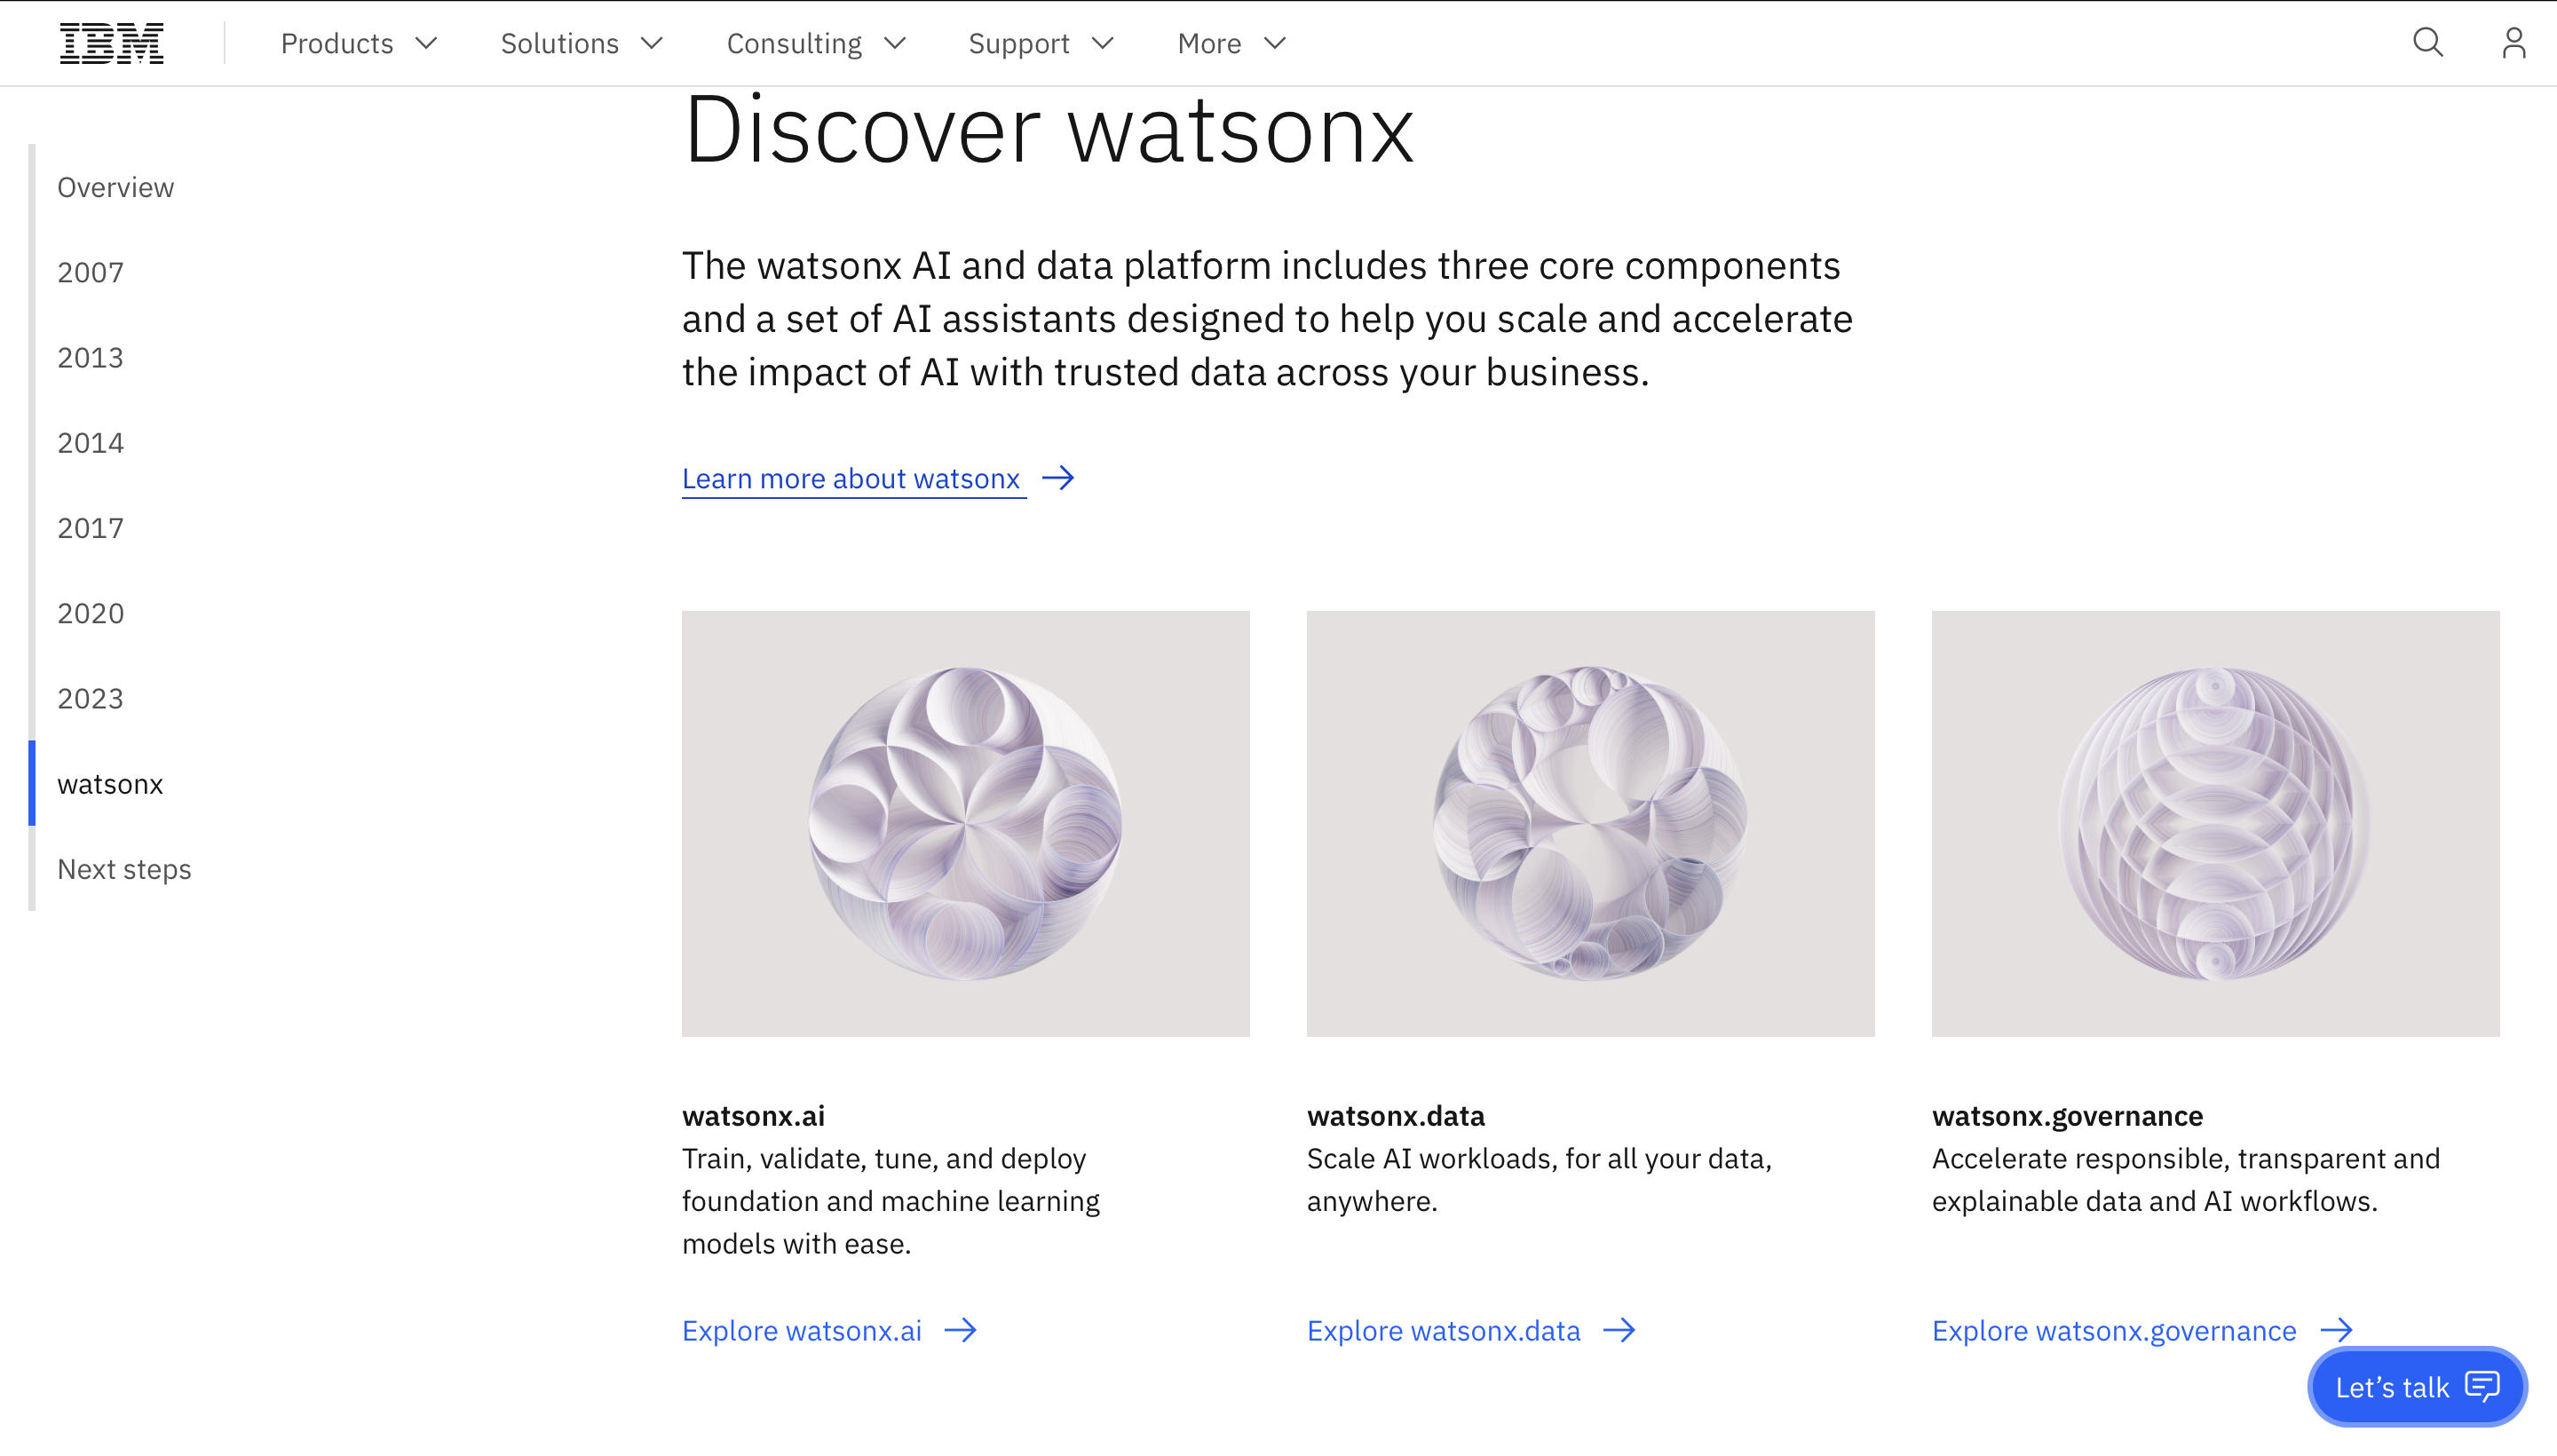 Watson AI capability image